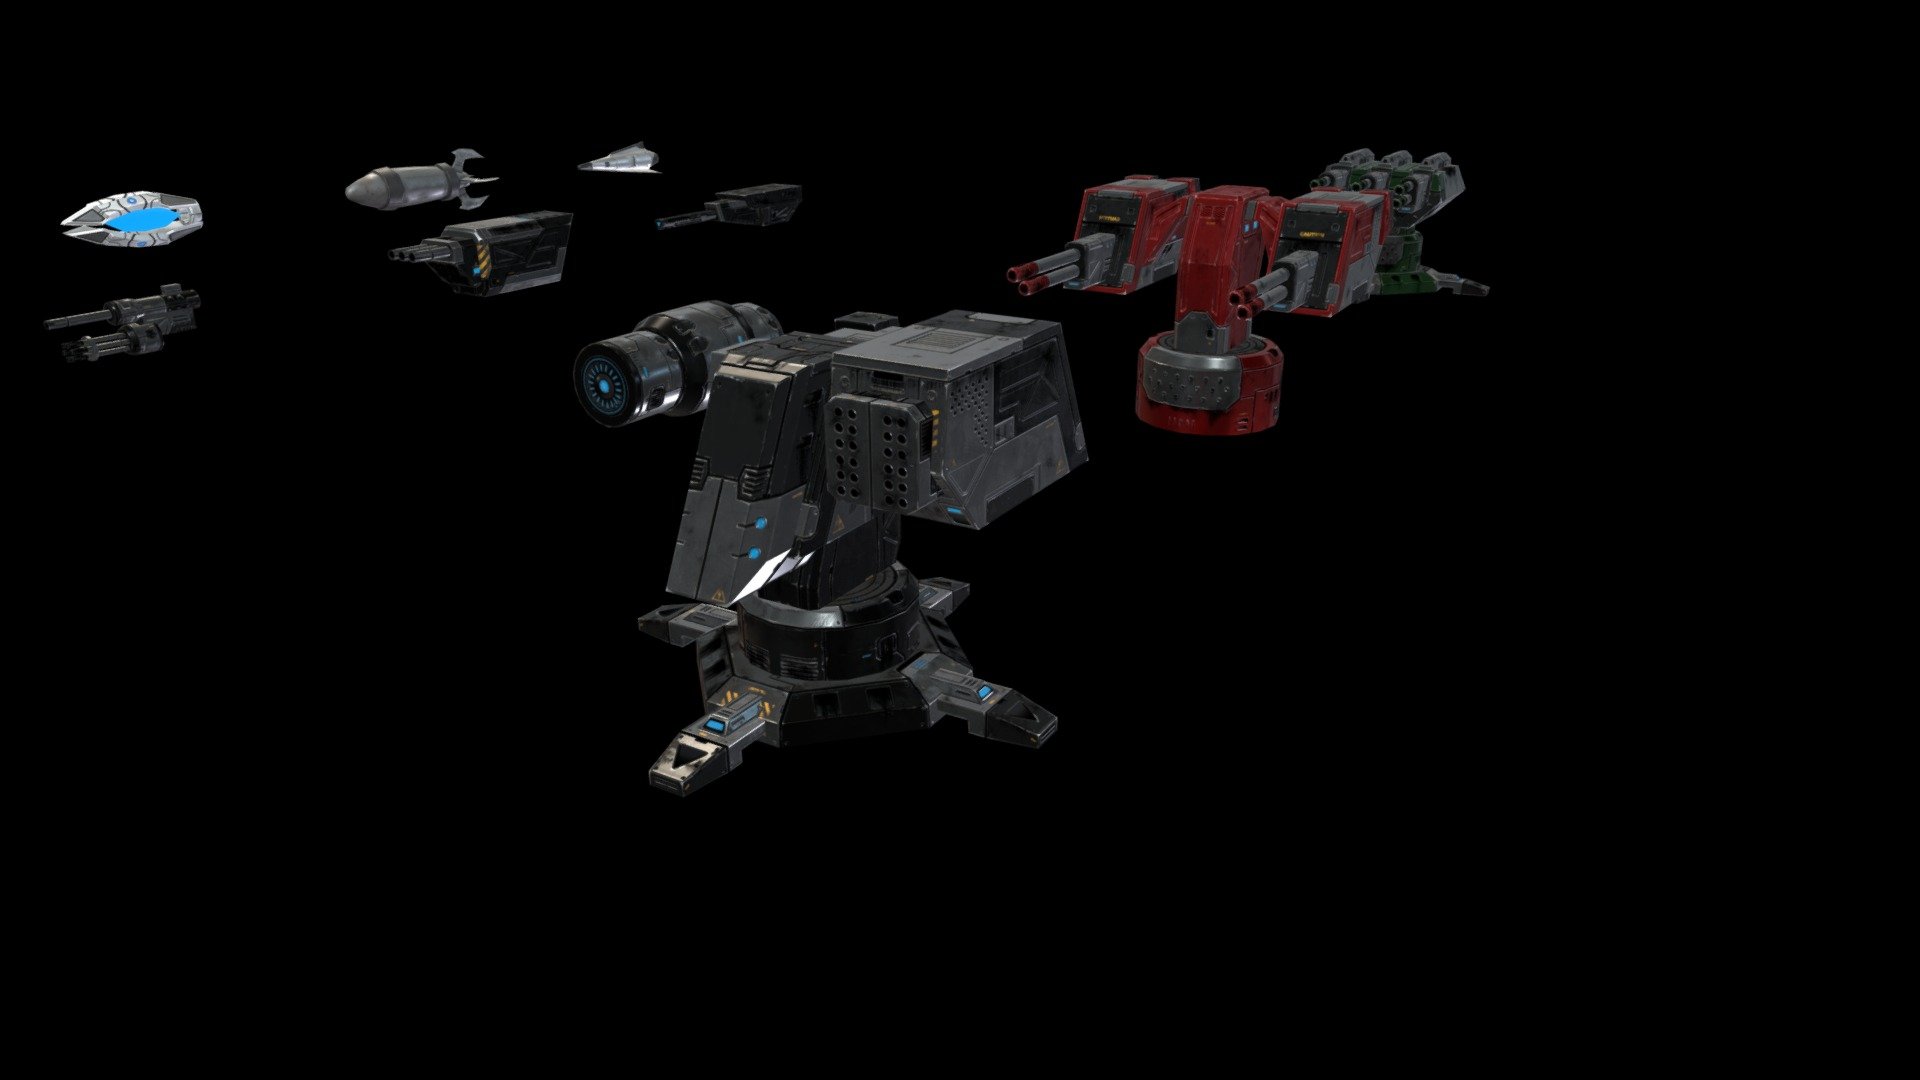 For more information visit: Ebal Studios - Modular Sci-Fi Weapons - 3D model by Ebal Studios (@EbalStudios) 3d model